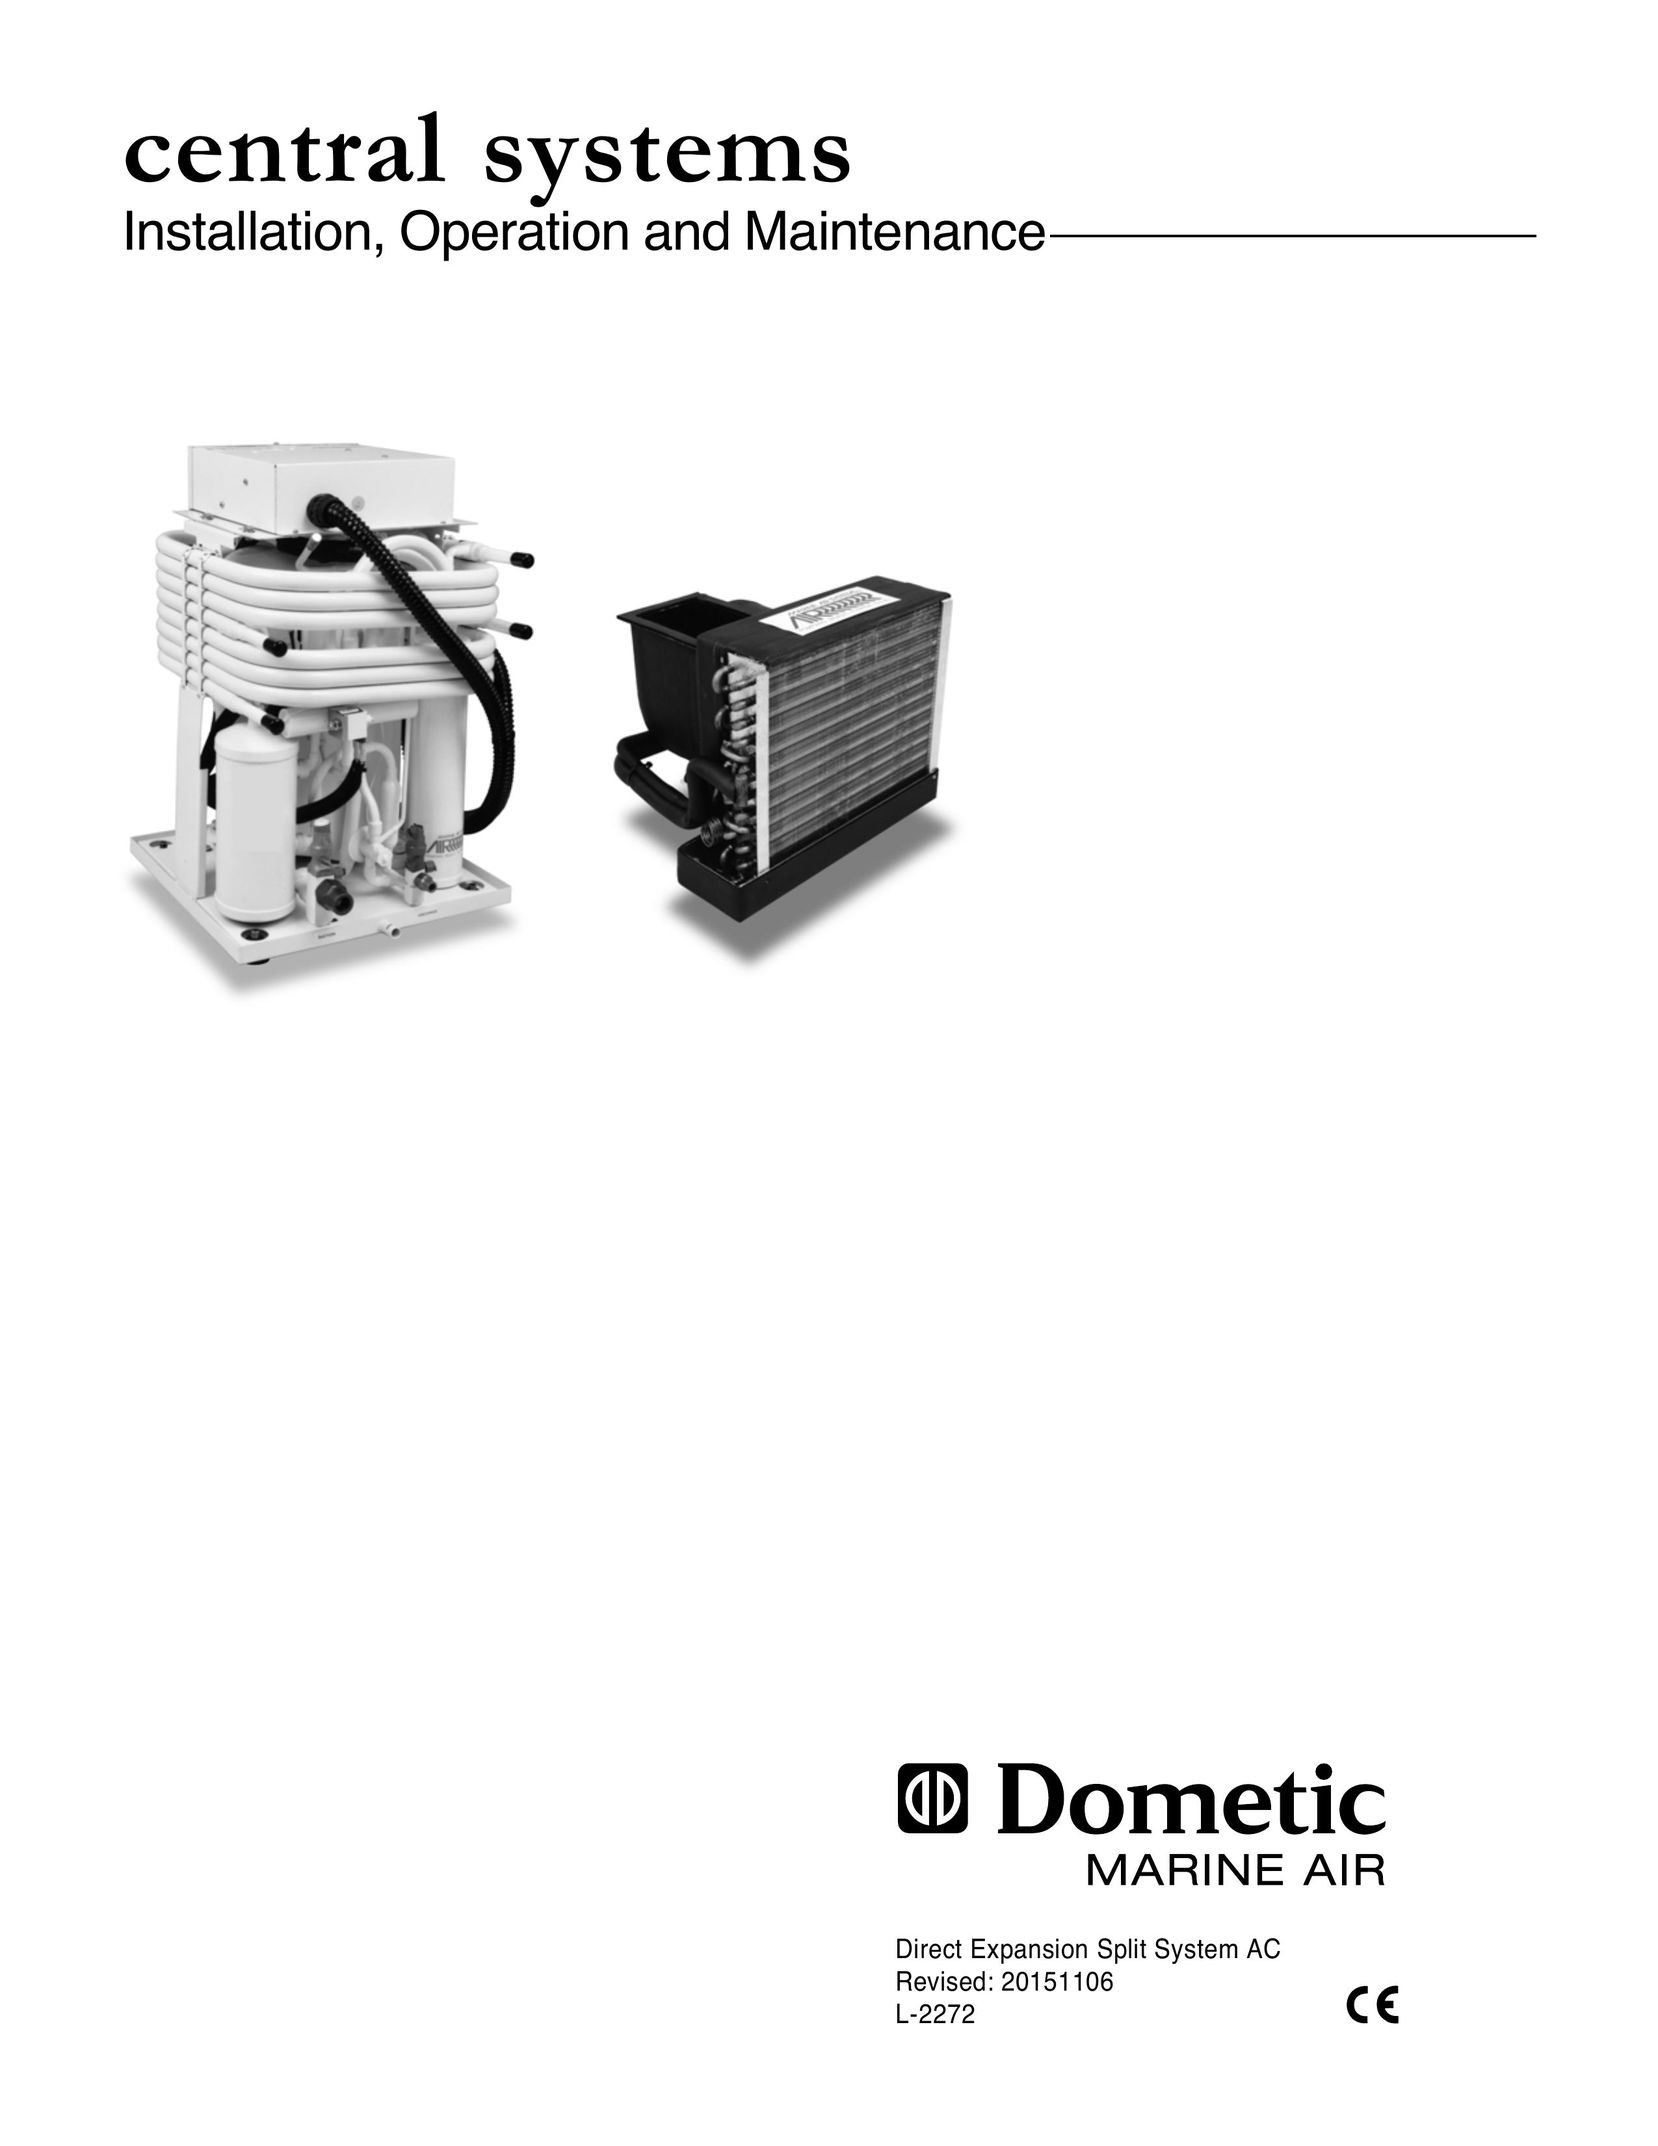 Dometic 20151106 L-2272 Air Conditioner User Manual